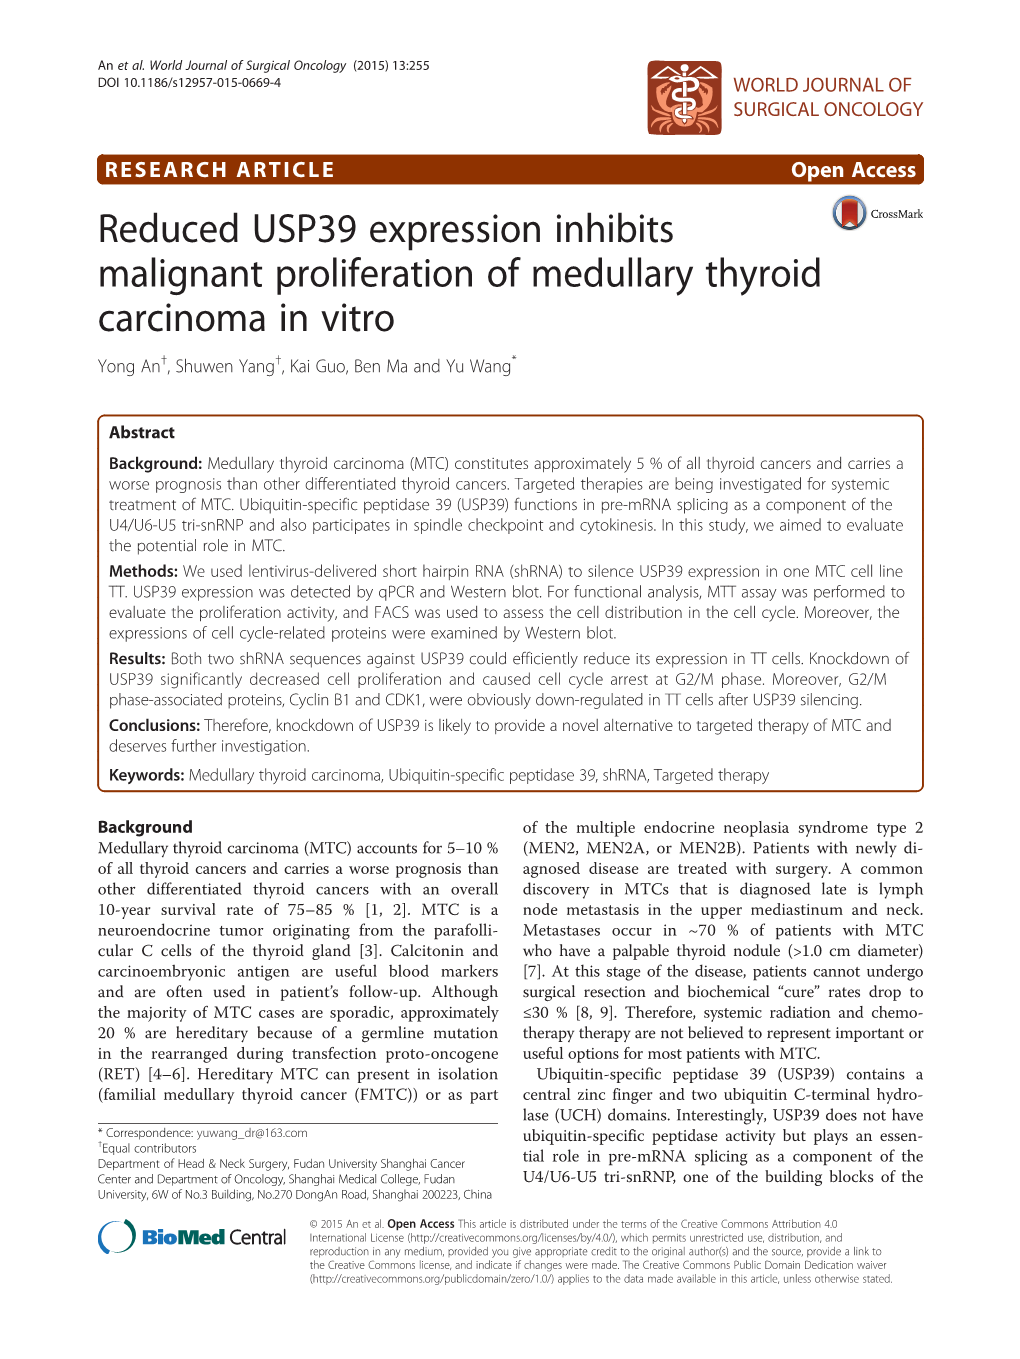 Reduced USP39 Expression Inhibits Malignant Proliferation of Medullary Thyroid Carcinoma in Vitro Yong An†, Shuwen Yang†, Kai Guo, Ben Ma and Yu Wang*